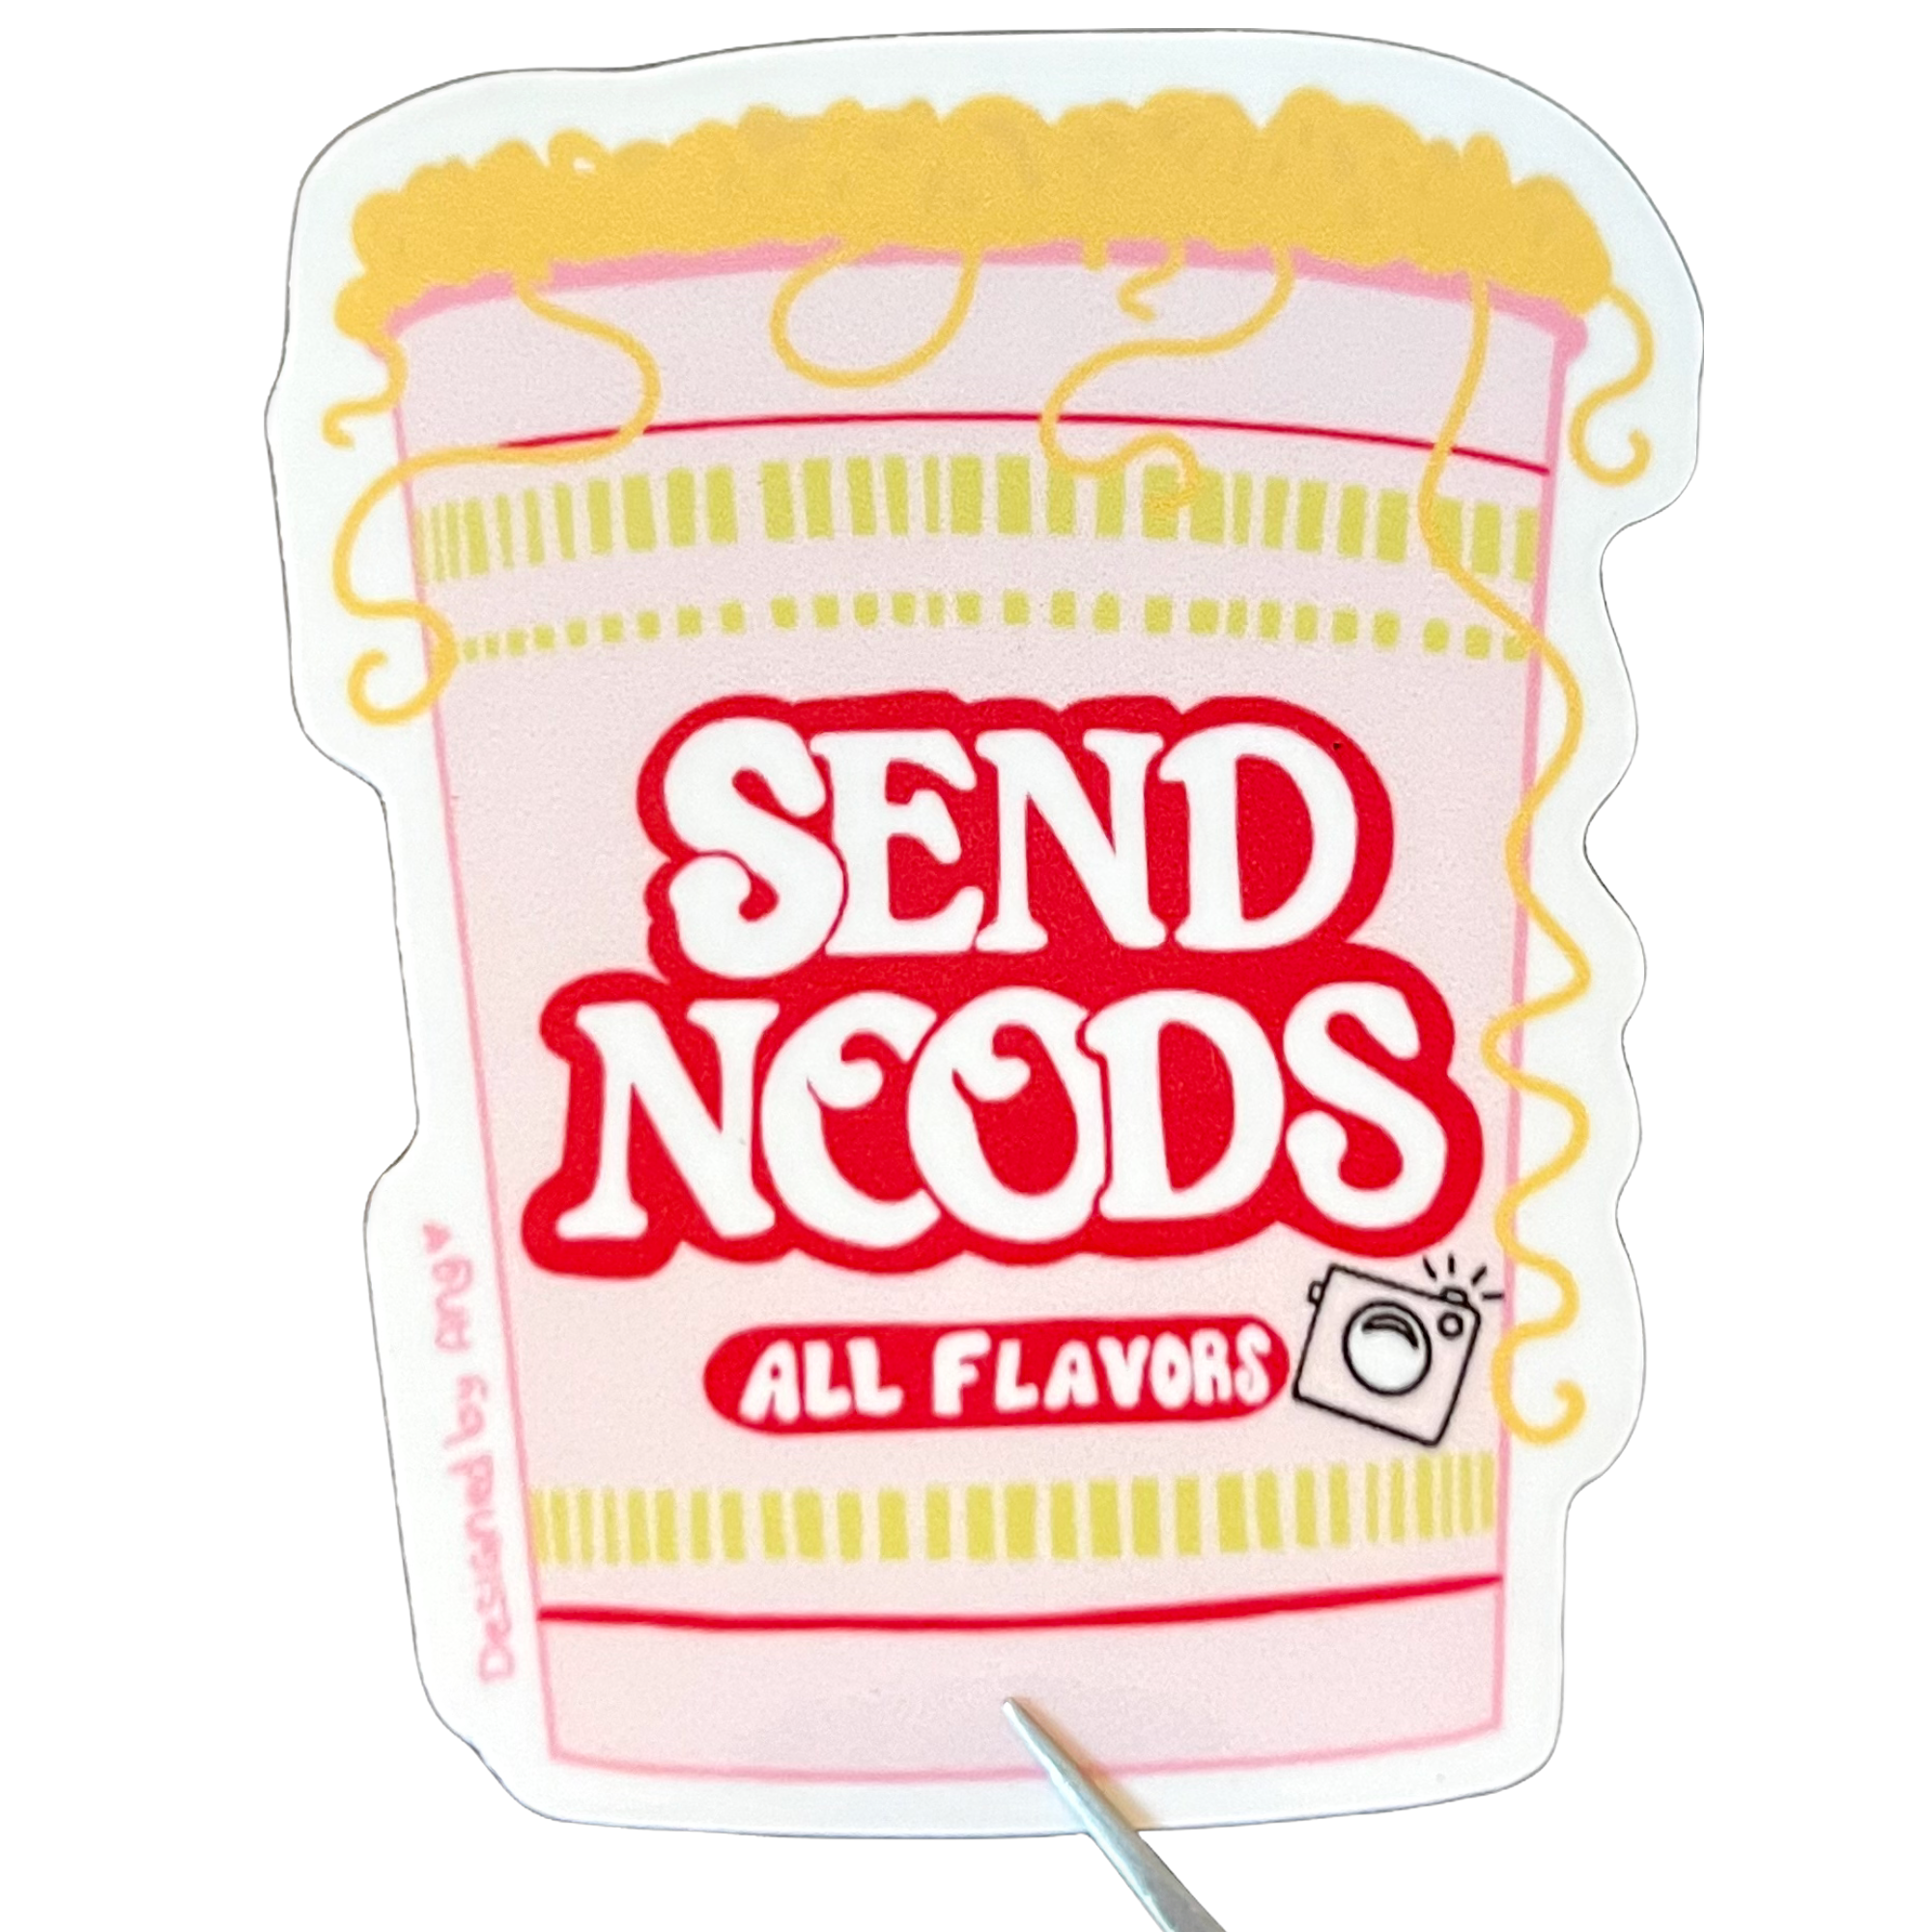  Send NOODS DesignedbyAng